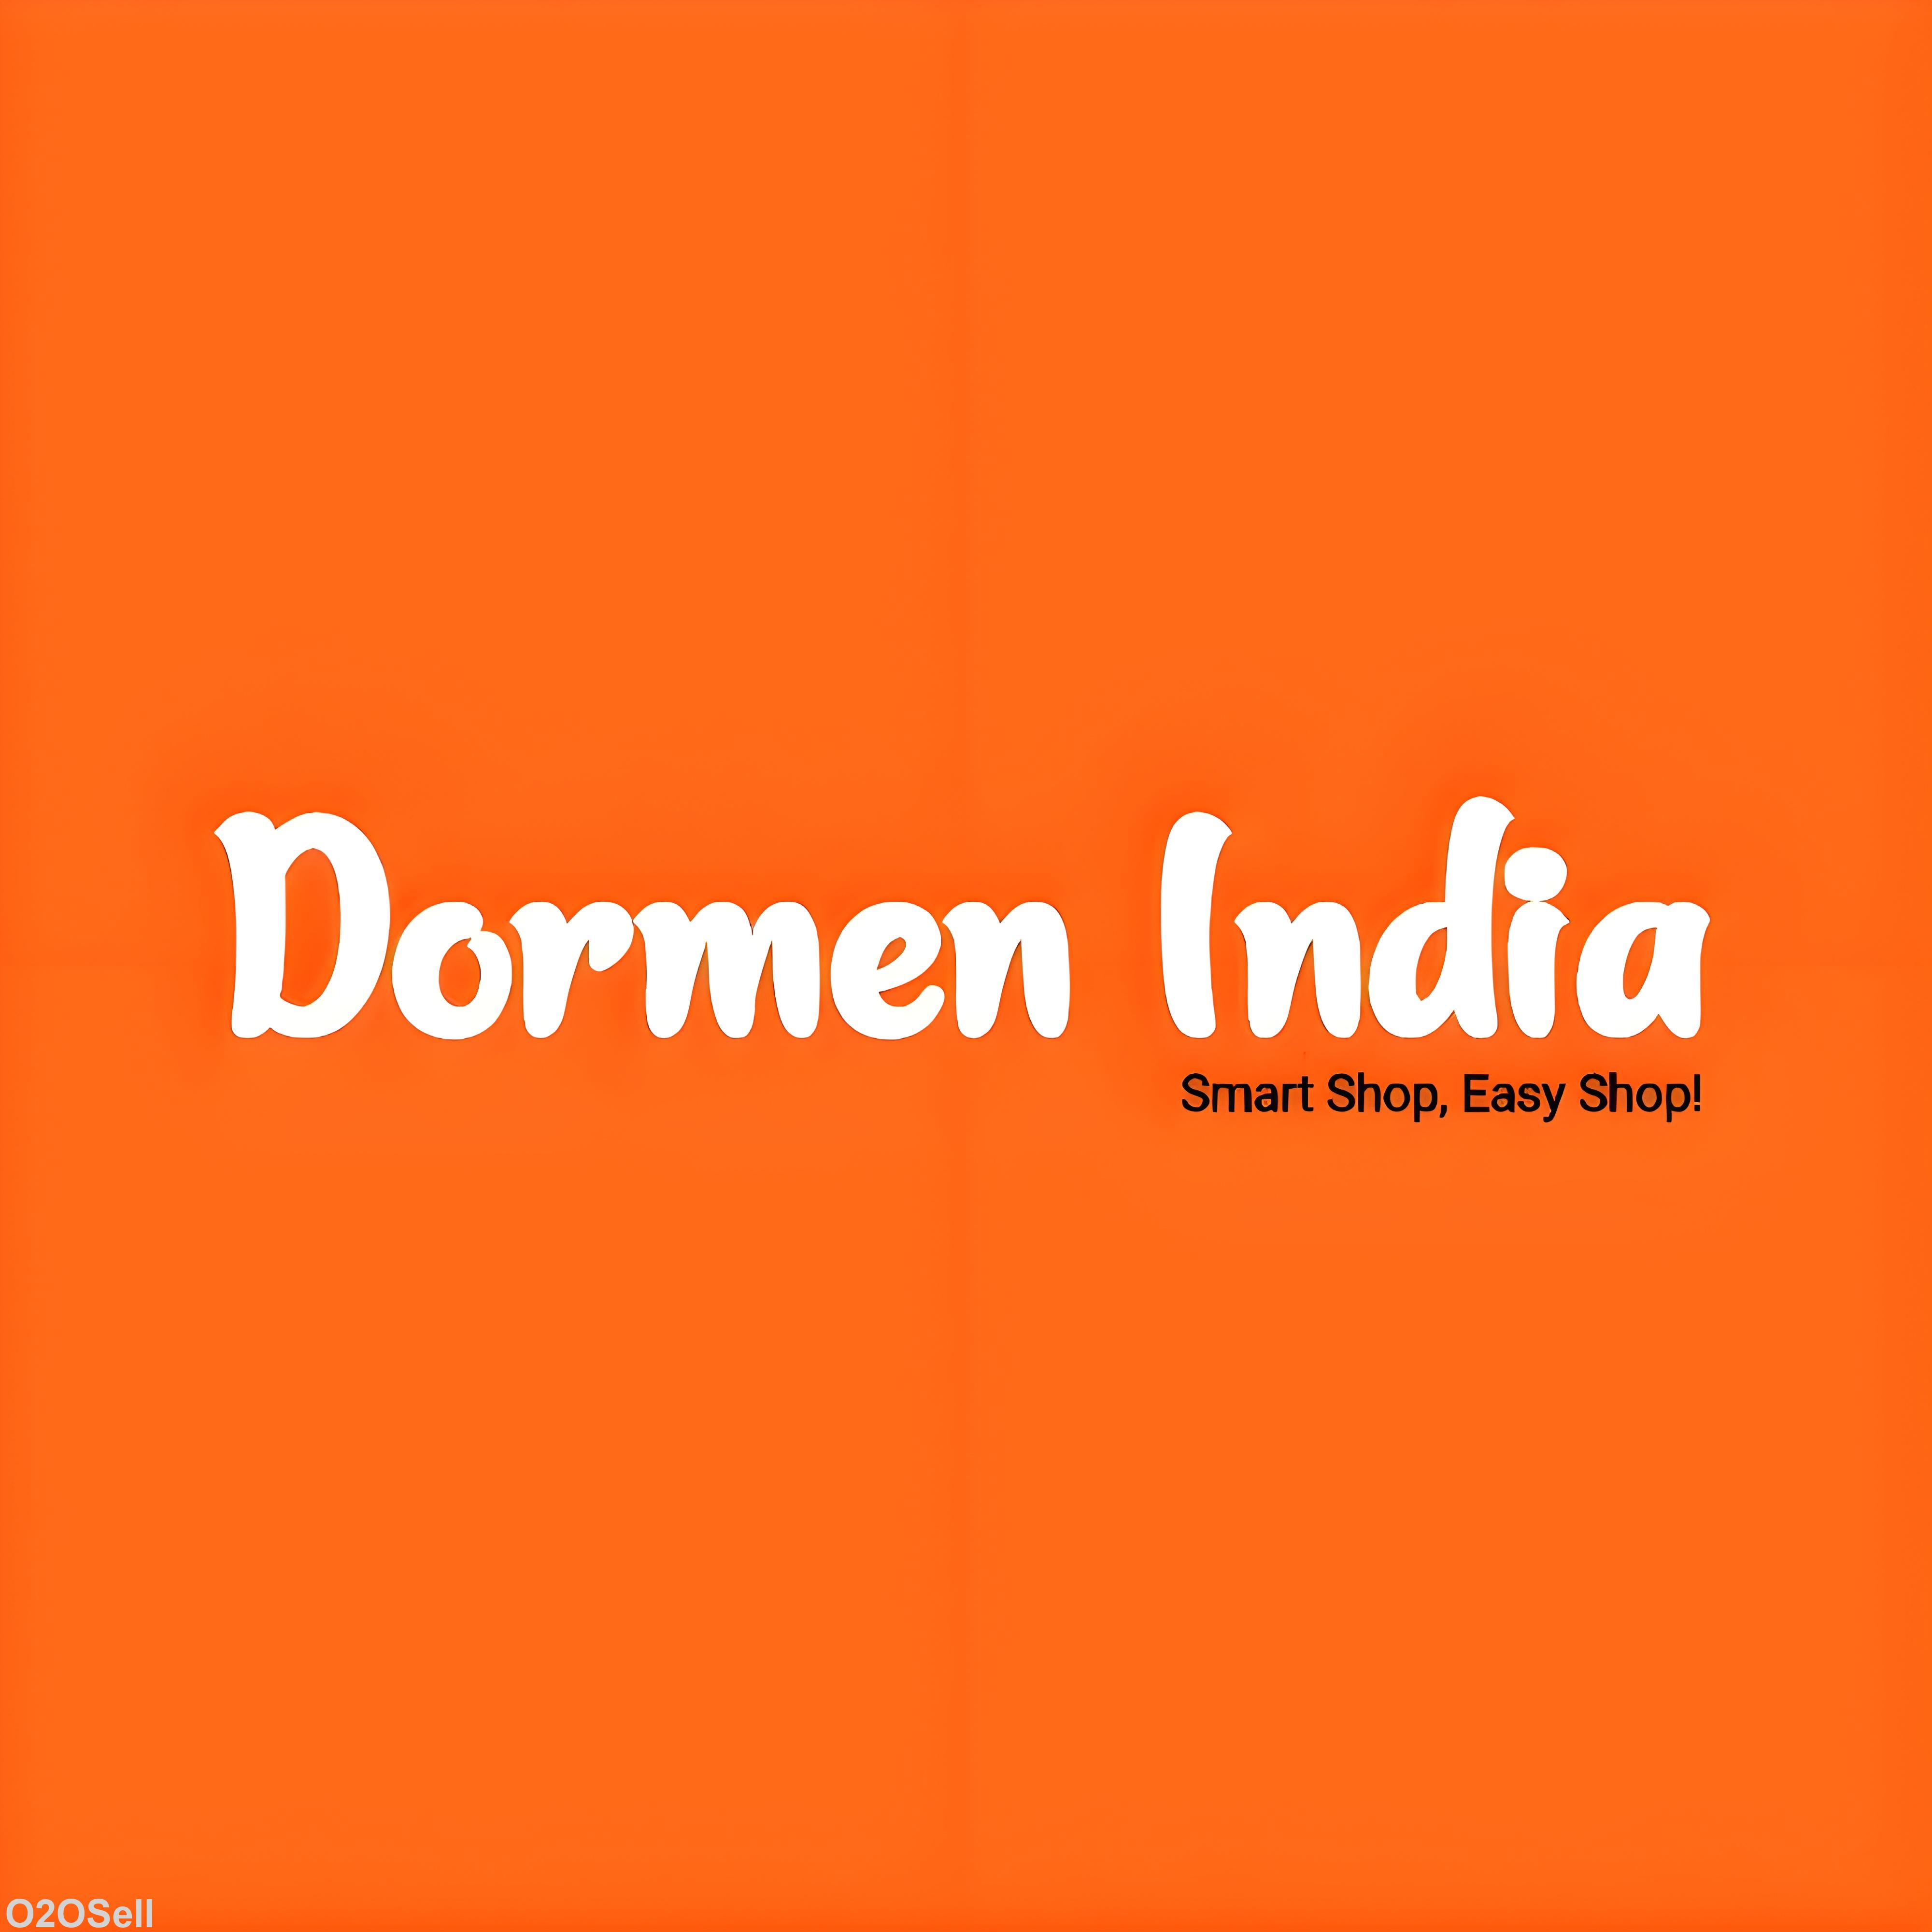 Dormen India - Shop Smart, Shop Easy! - Profile Image